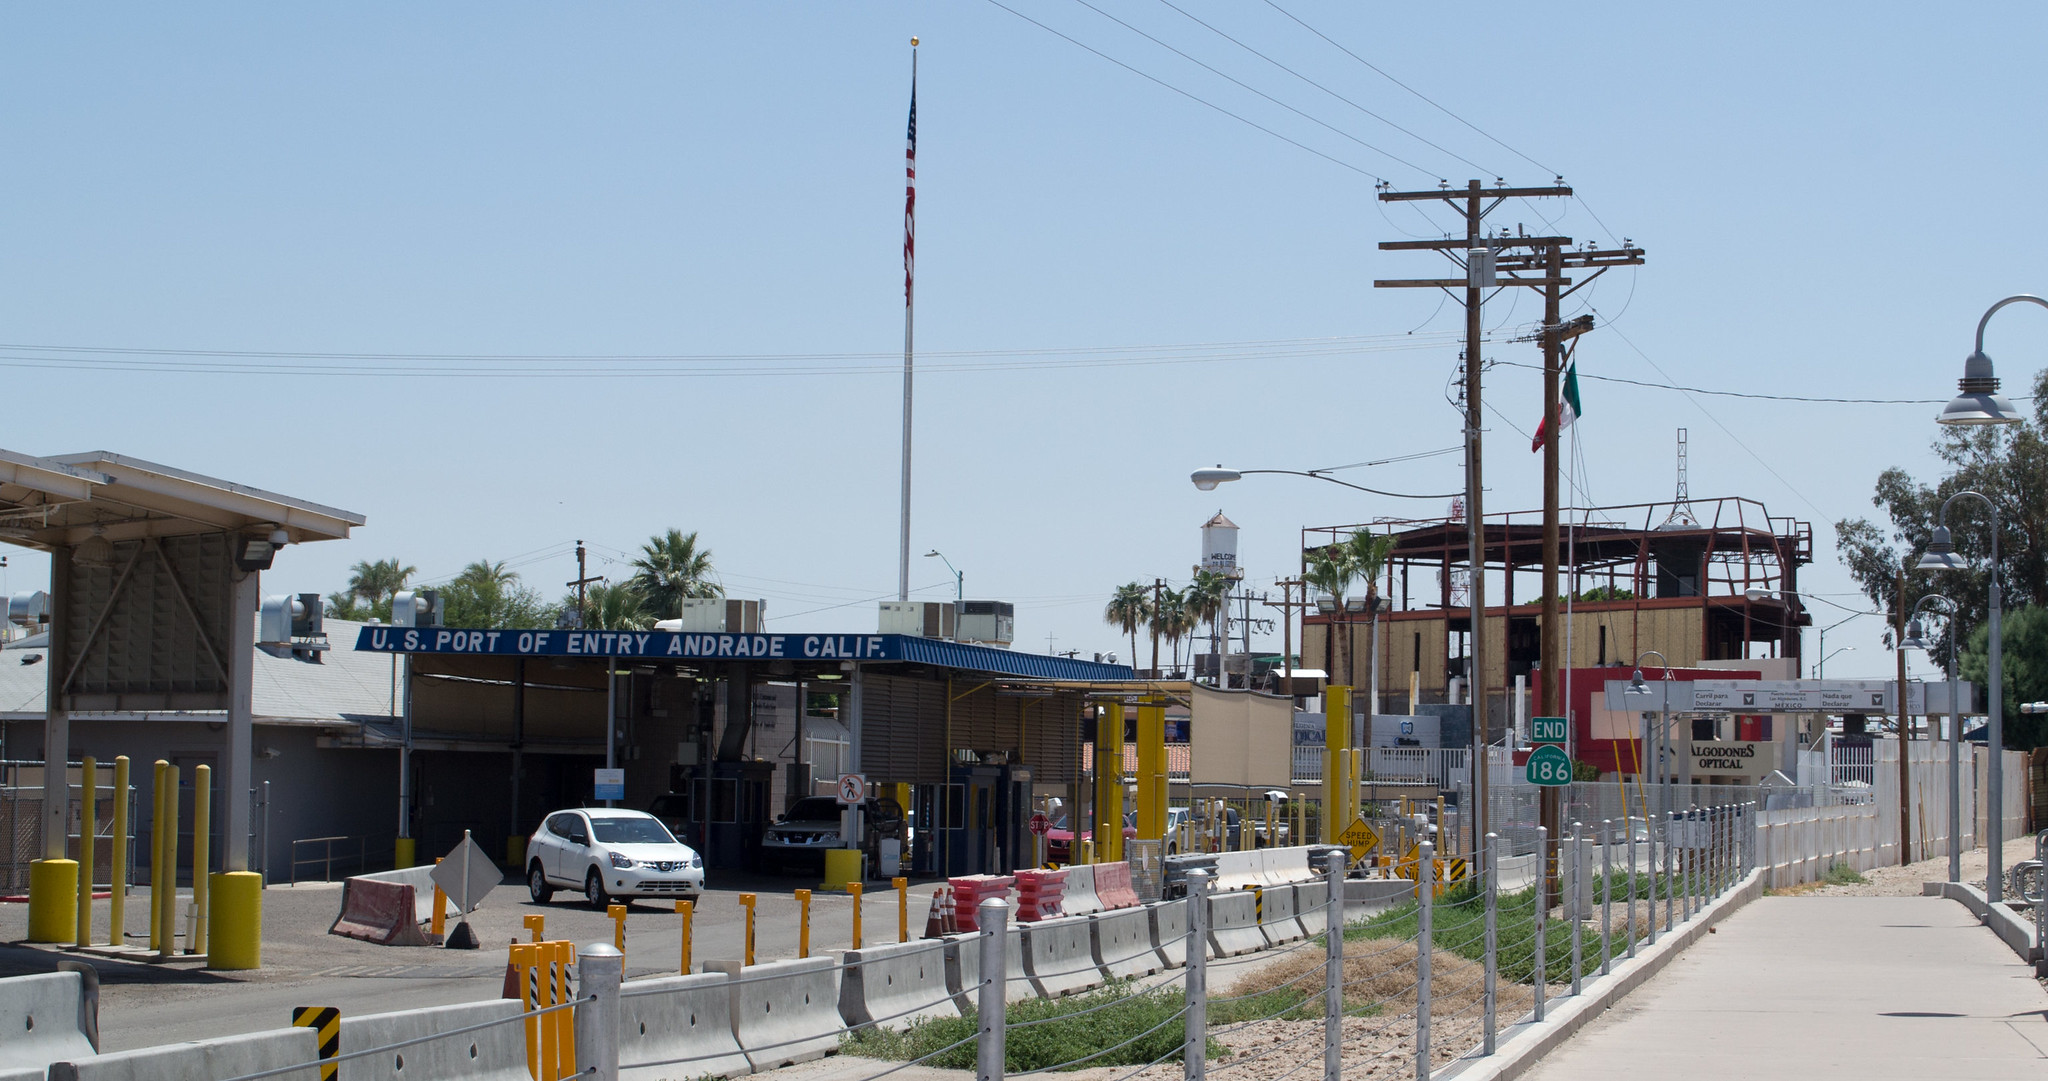 Port of Entry in California/Mexico border.